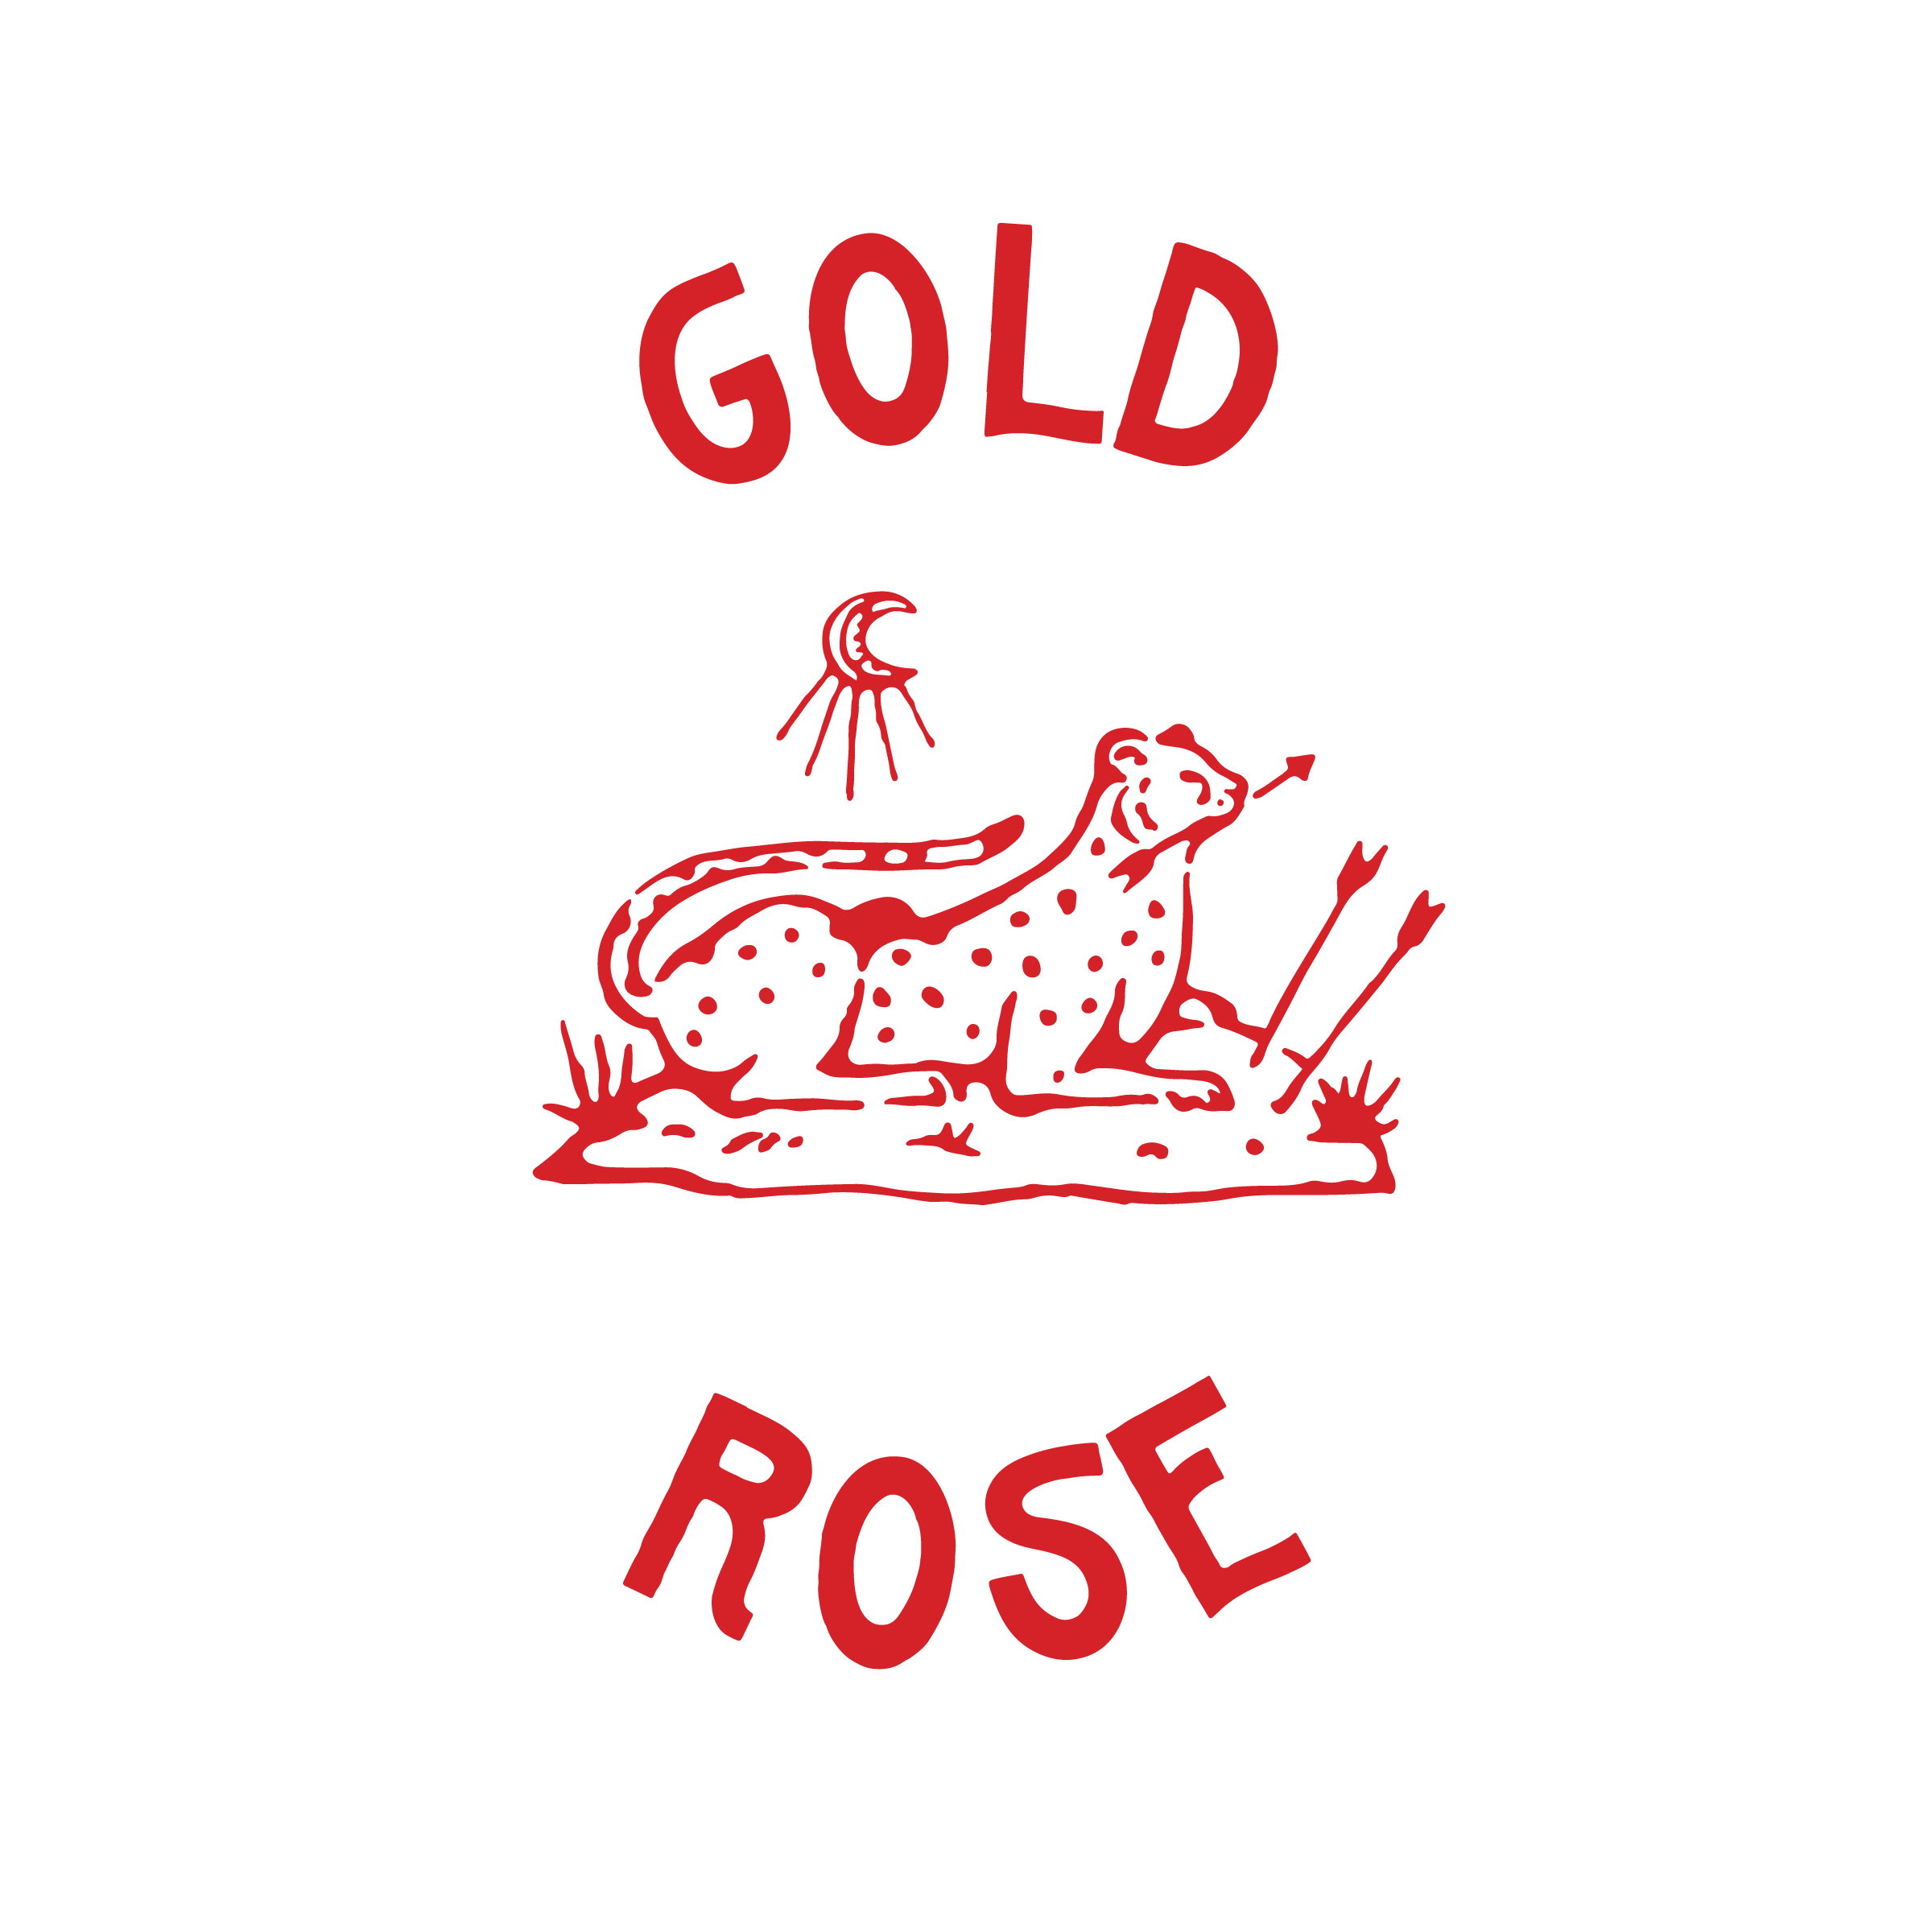   Gold Rose